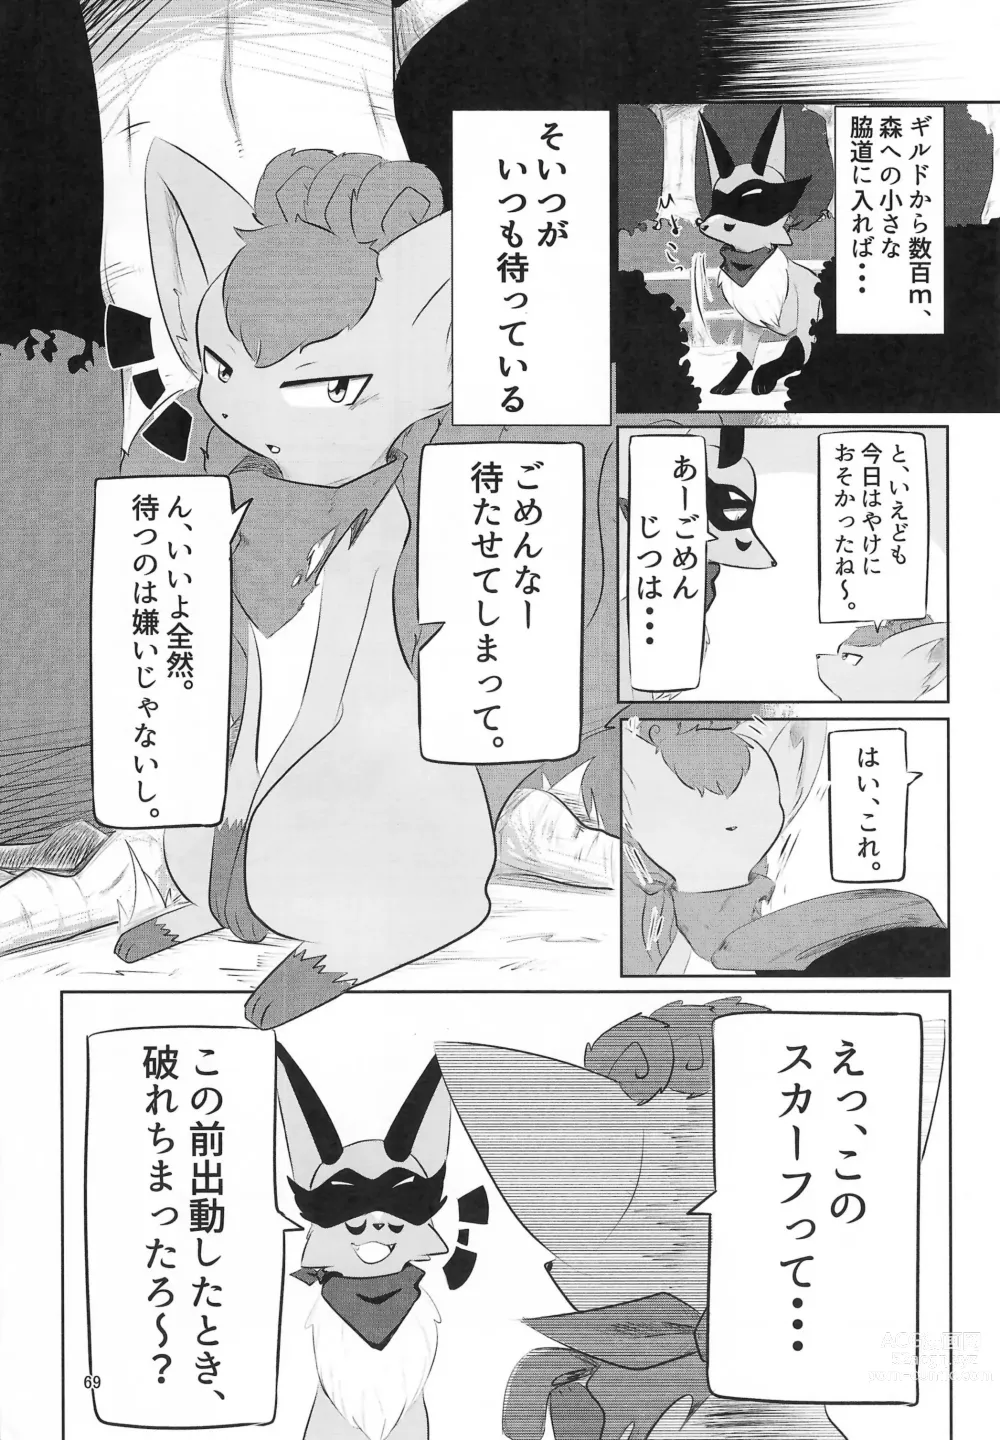 Page 69 of doujinshi Yotsu Ashi BL Anthology K9S